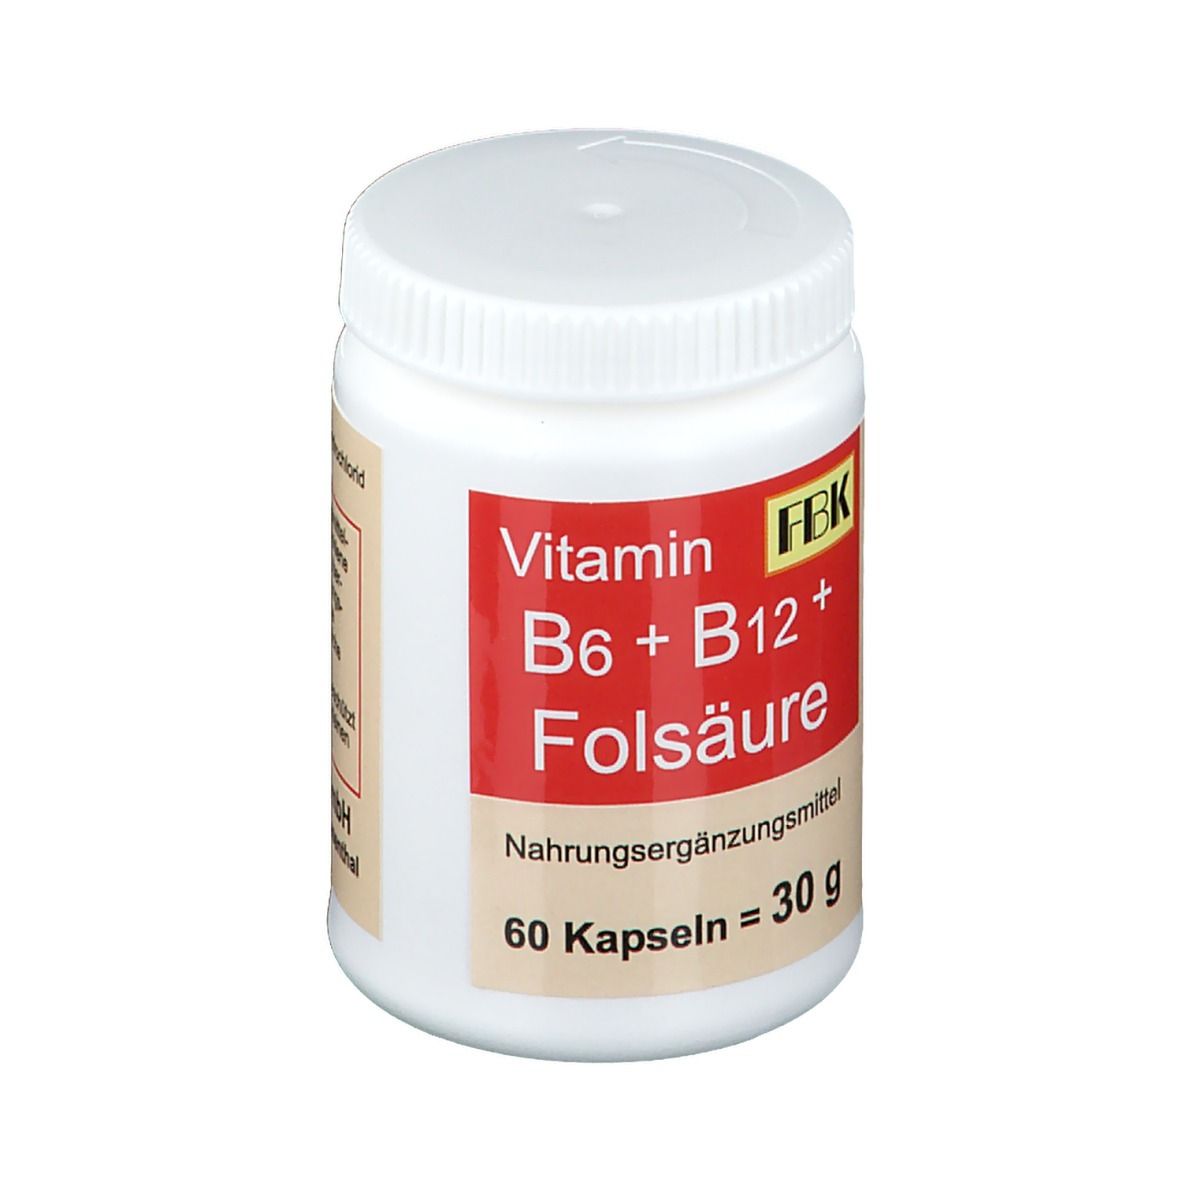 Vitamin B6 + B12 + Folsäure